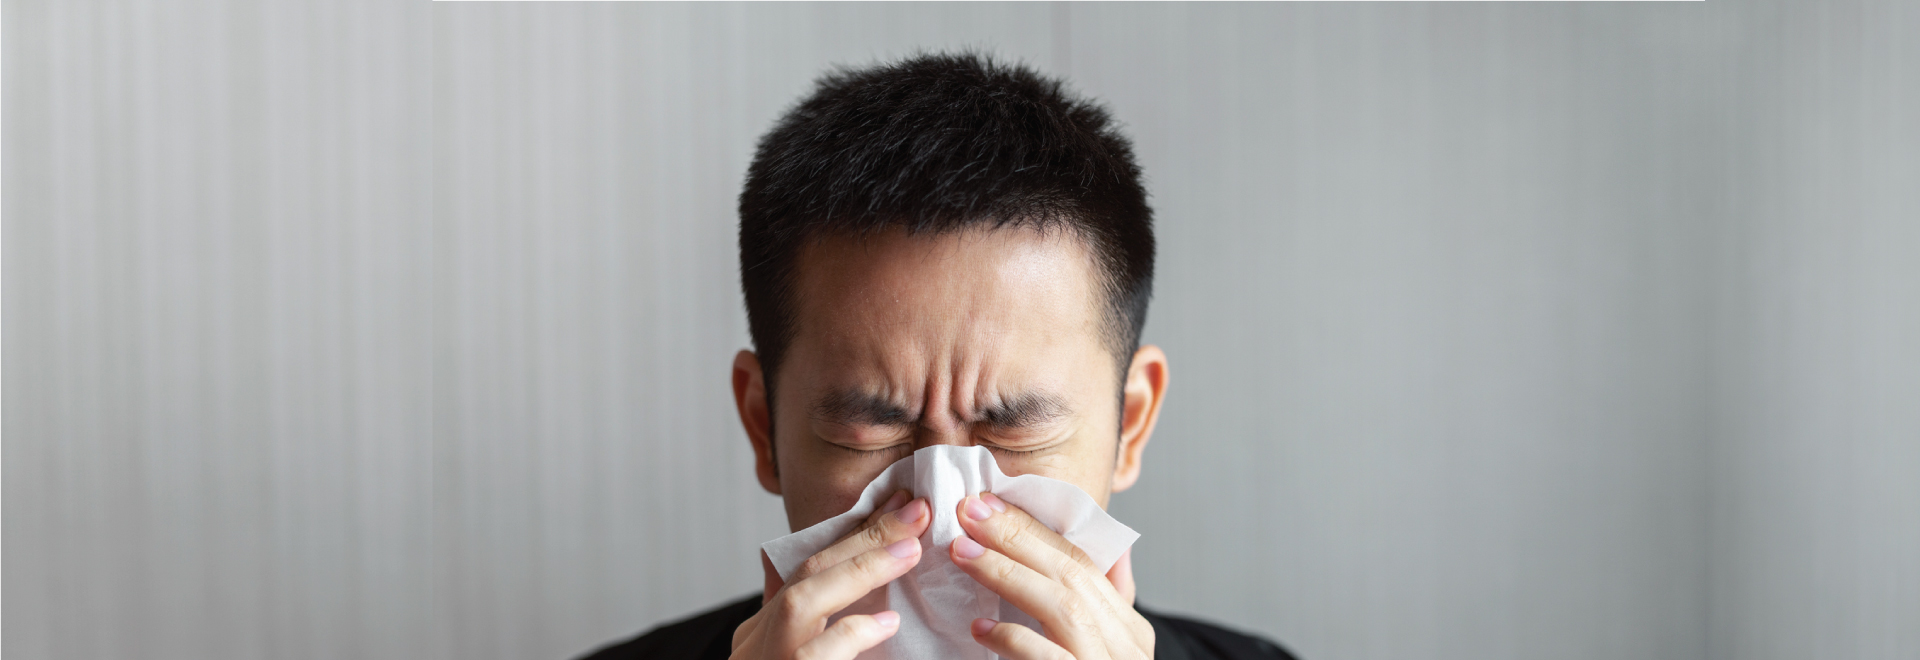 allergic-rhinitis-symptoms-treatment-home-remedies